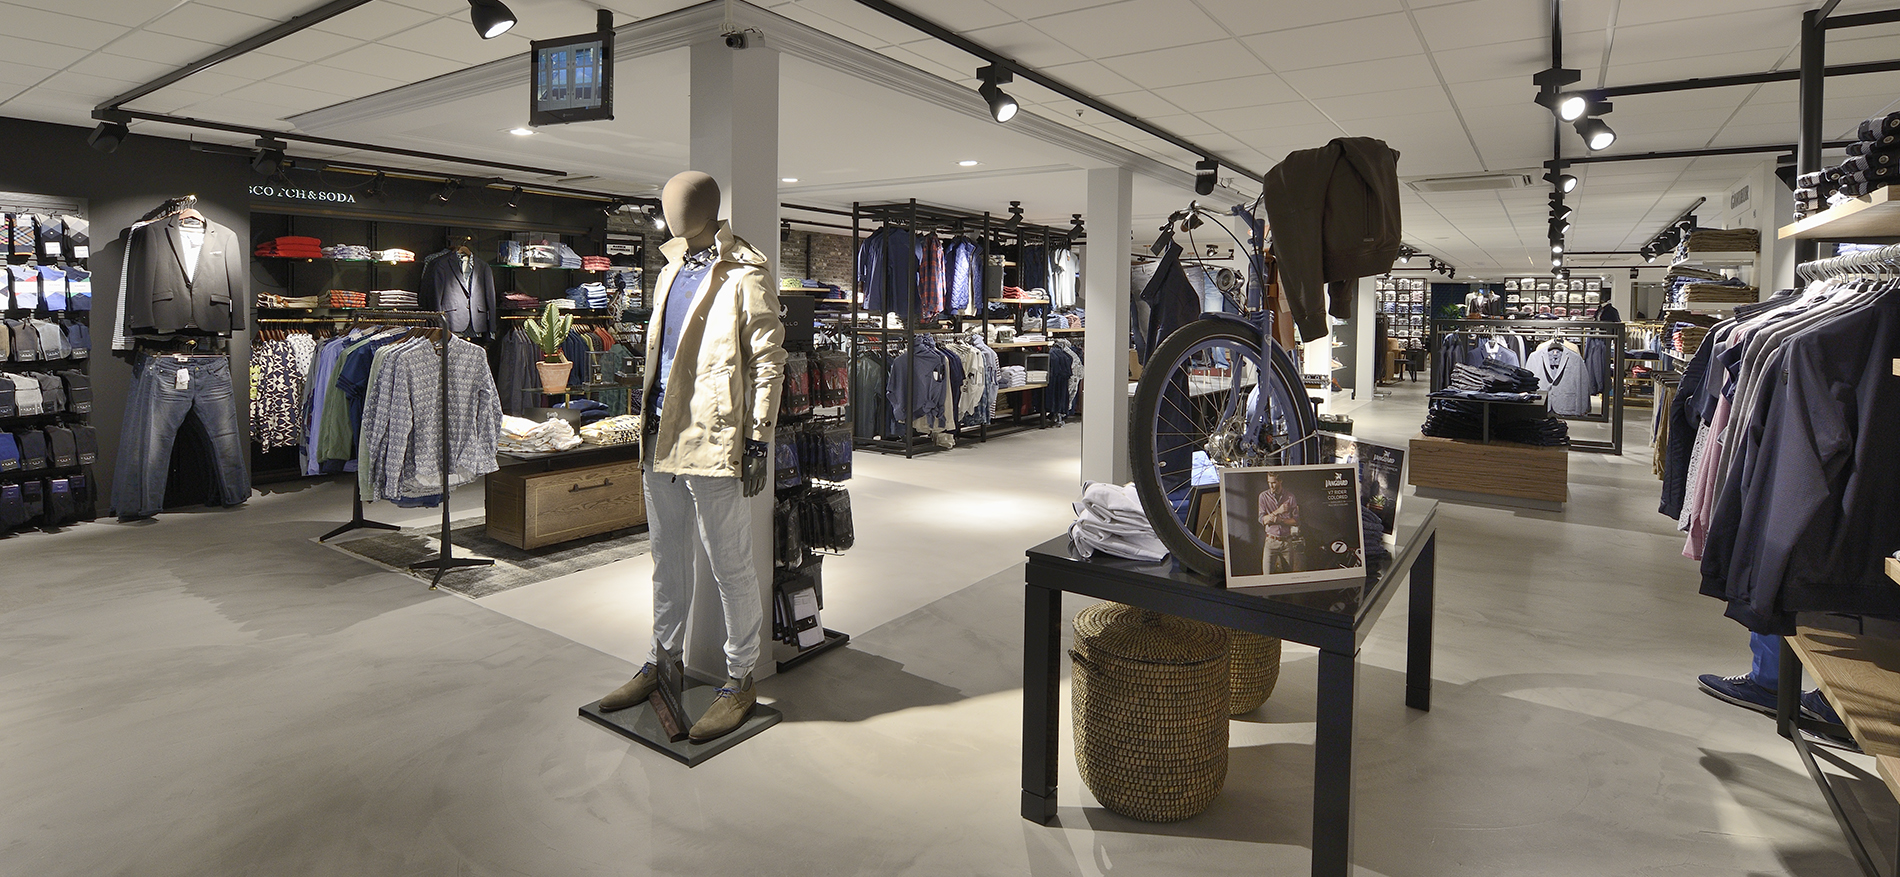 Bossenbroek Men’s Fashion: Retail design and shopfitting - Fashion